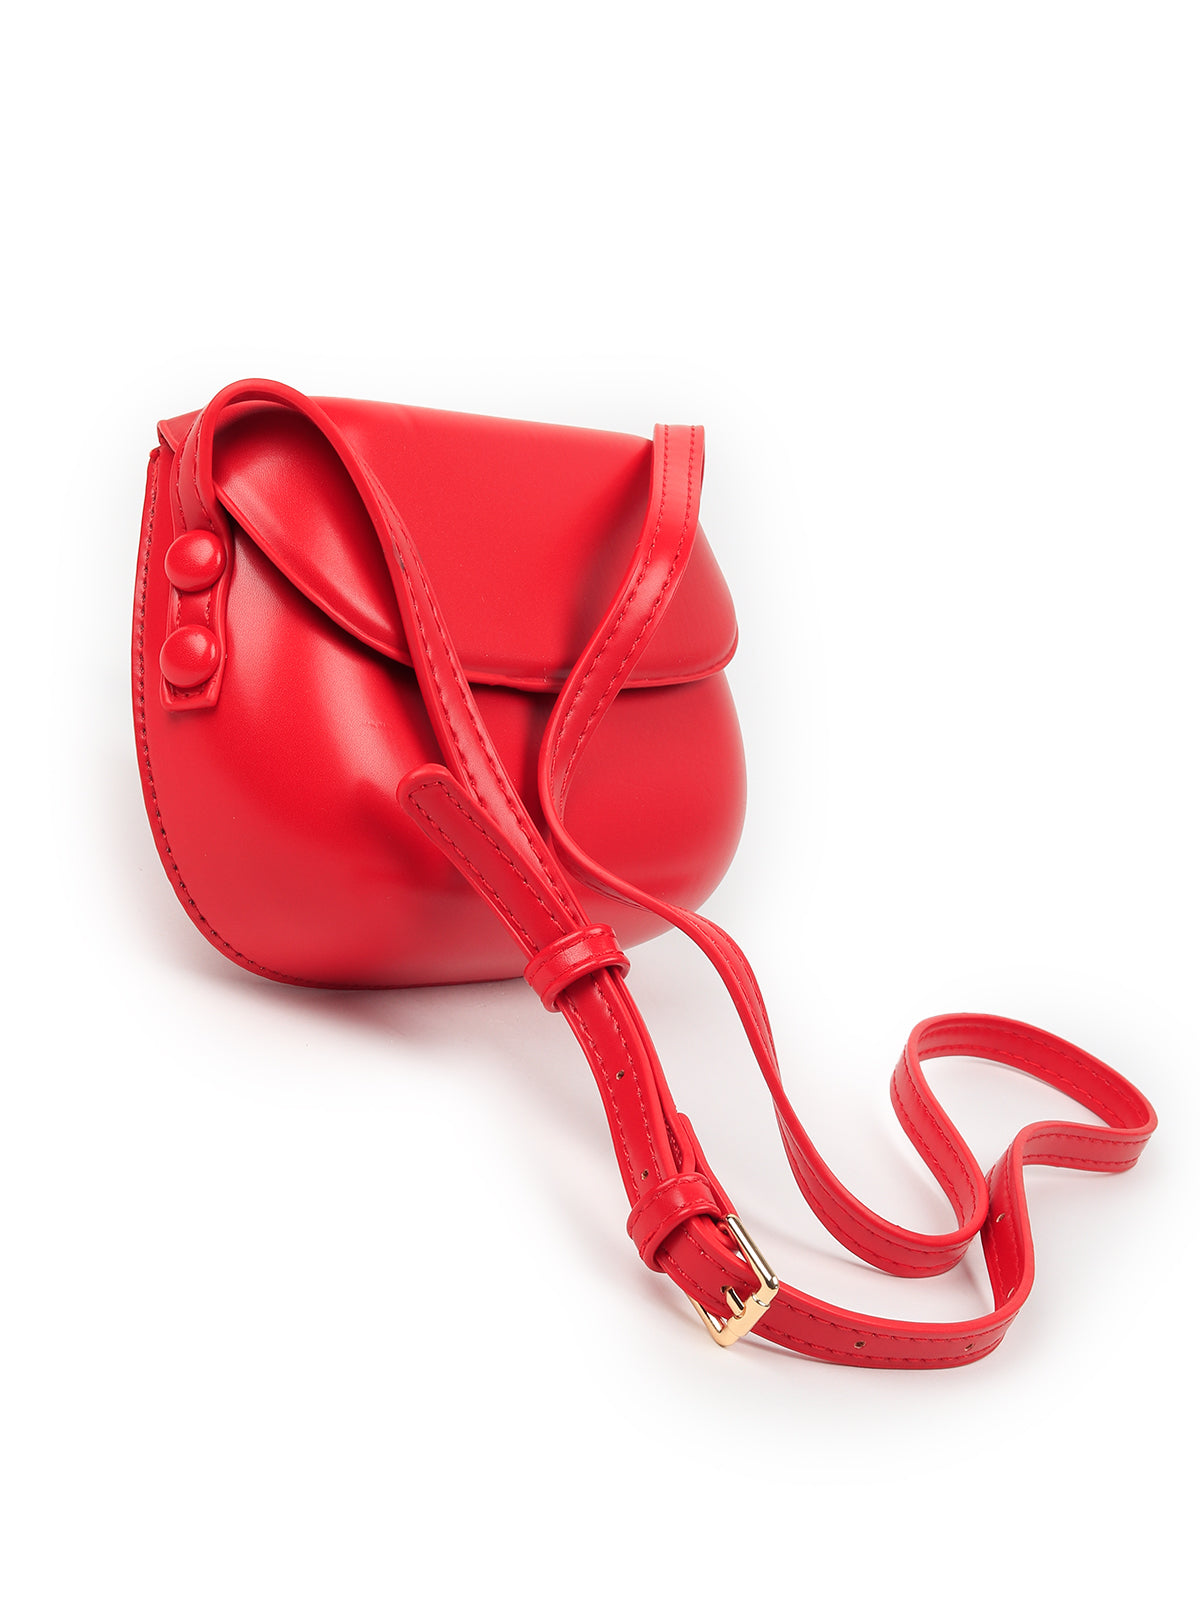 Red Structured Handbag